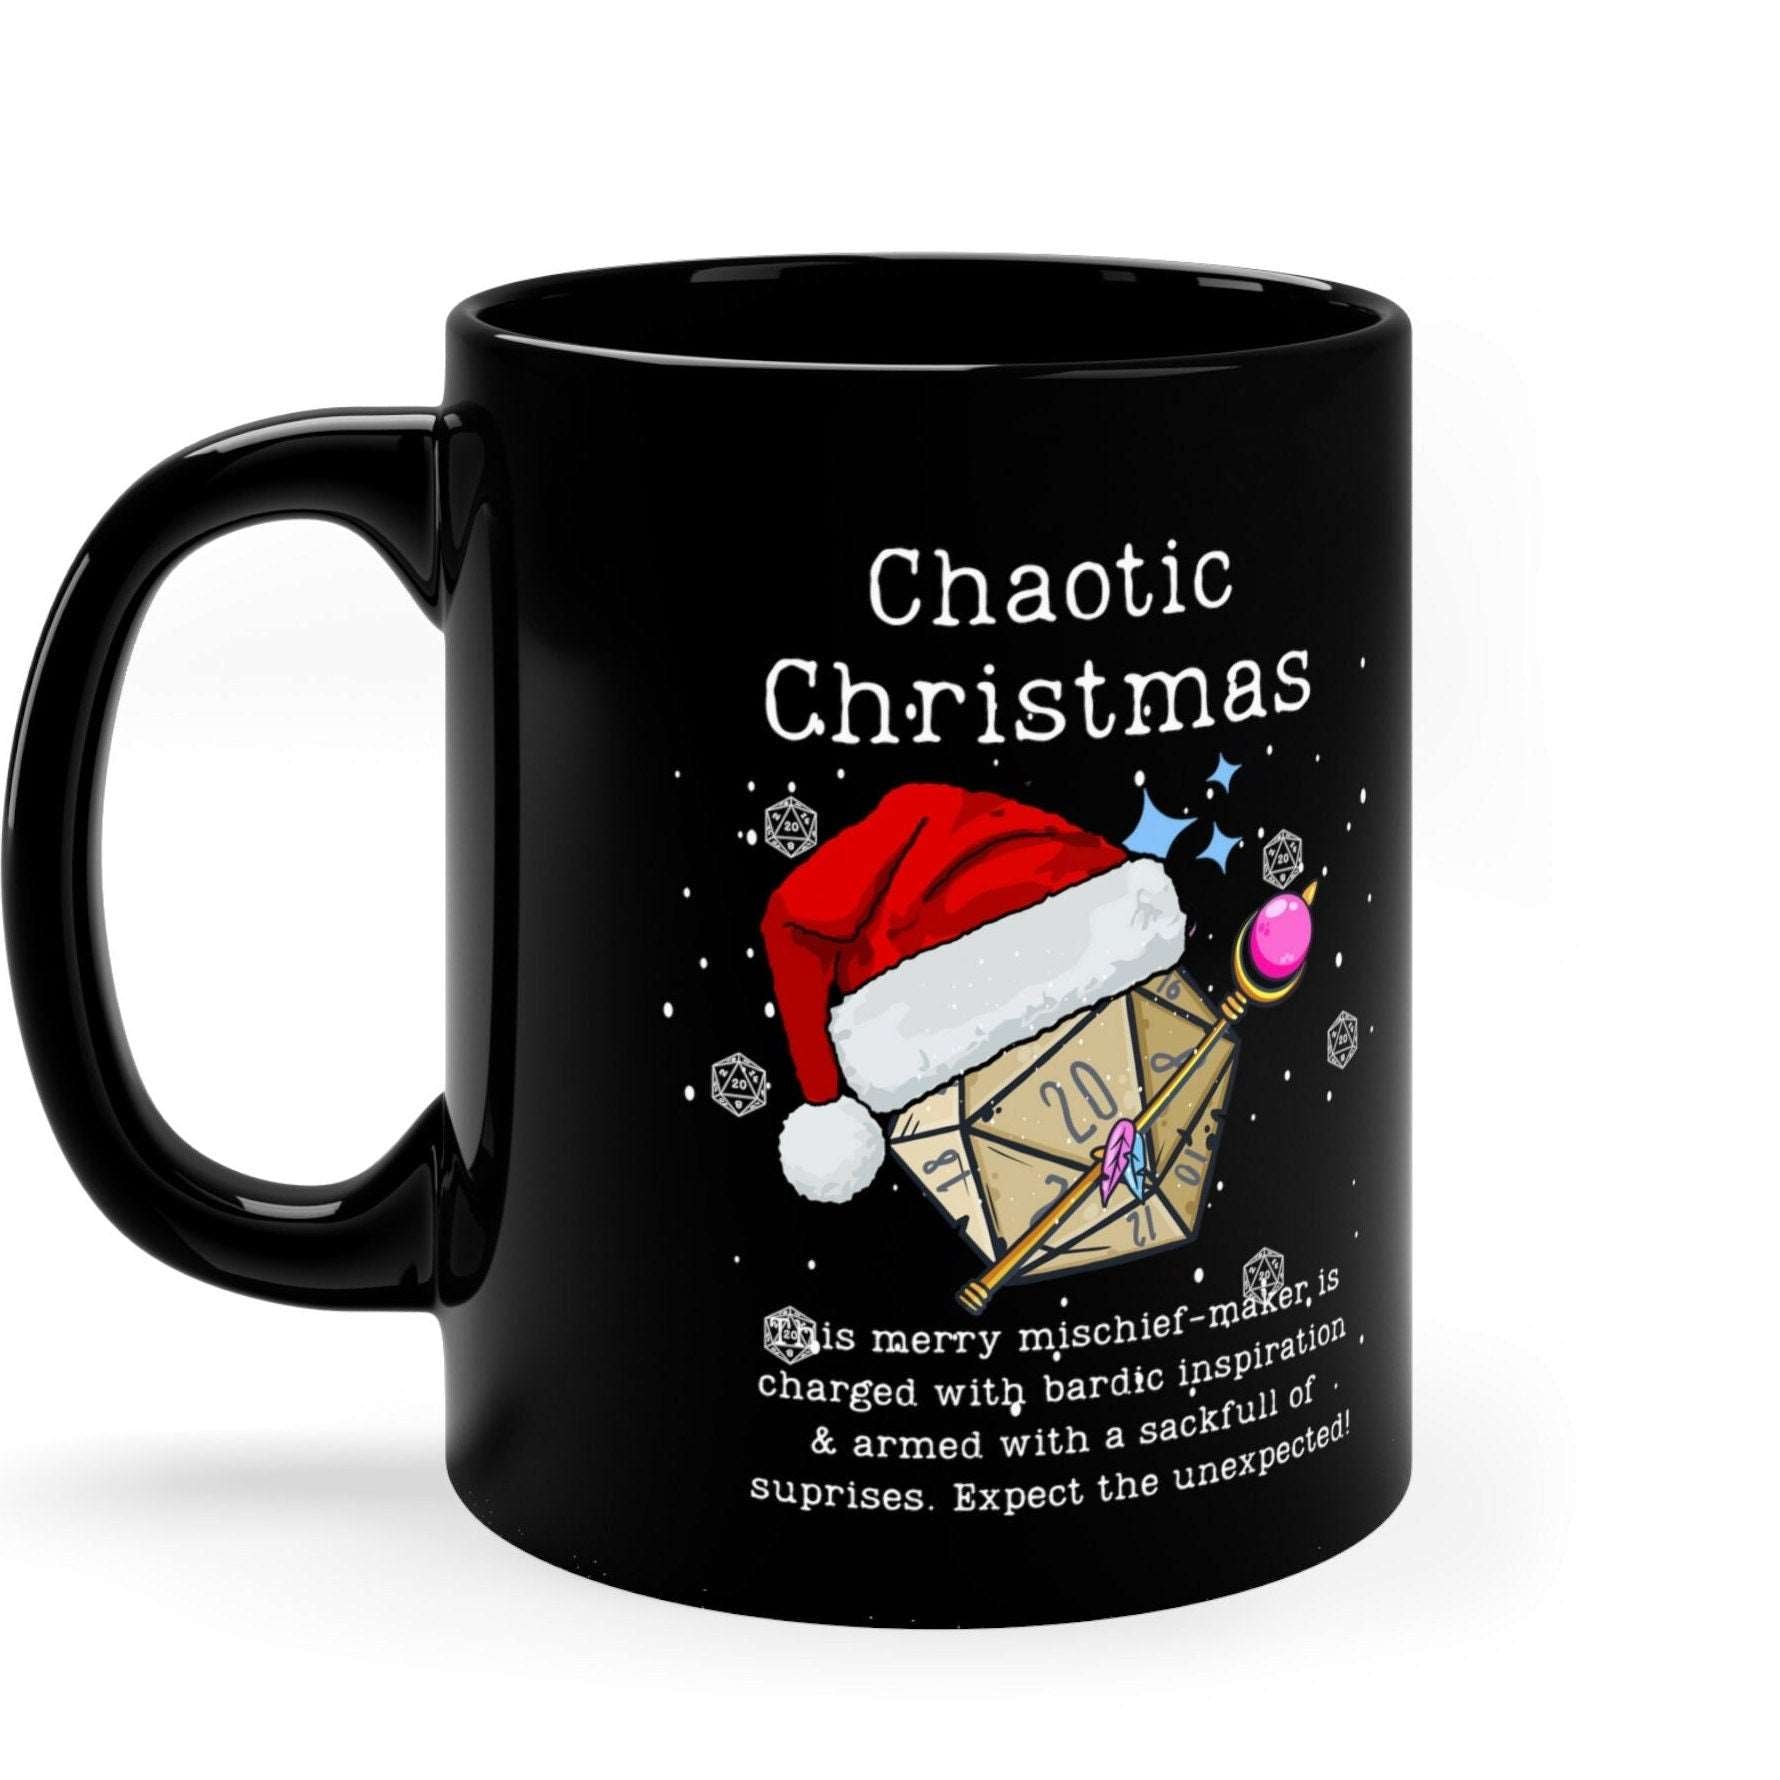 DnD Mug Chaotic Christmas, Gift for Dm, Dungeons Dragons Players, Baldur Fans, game Master or BG3 fans